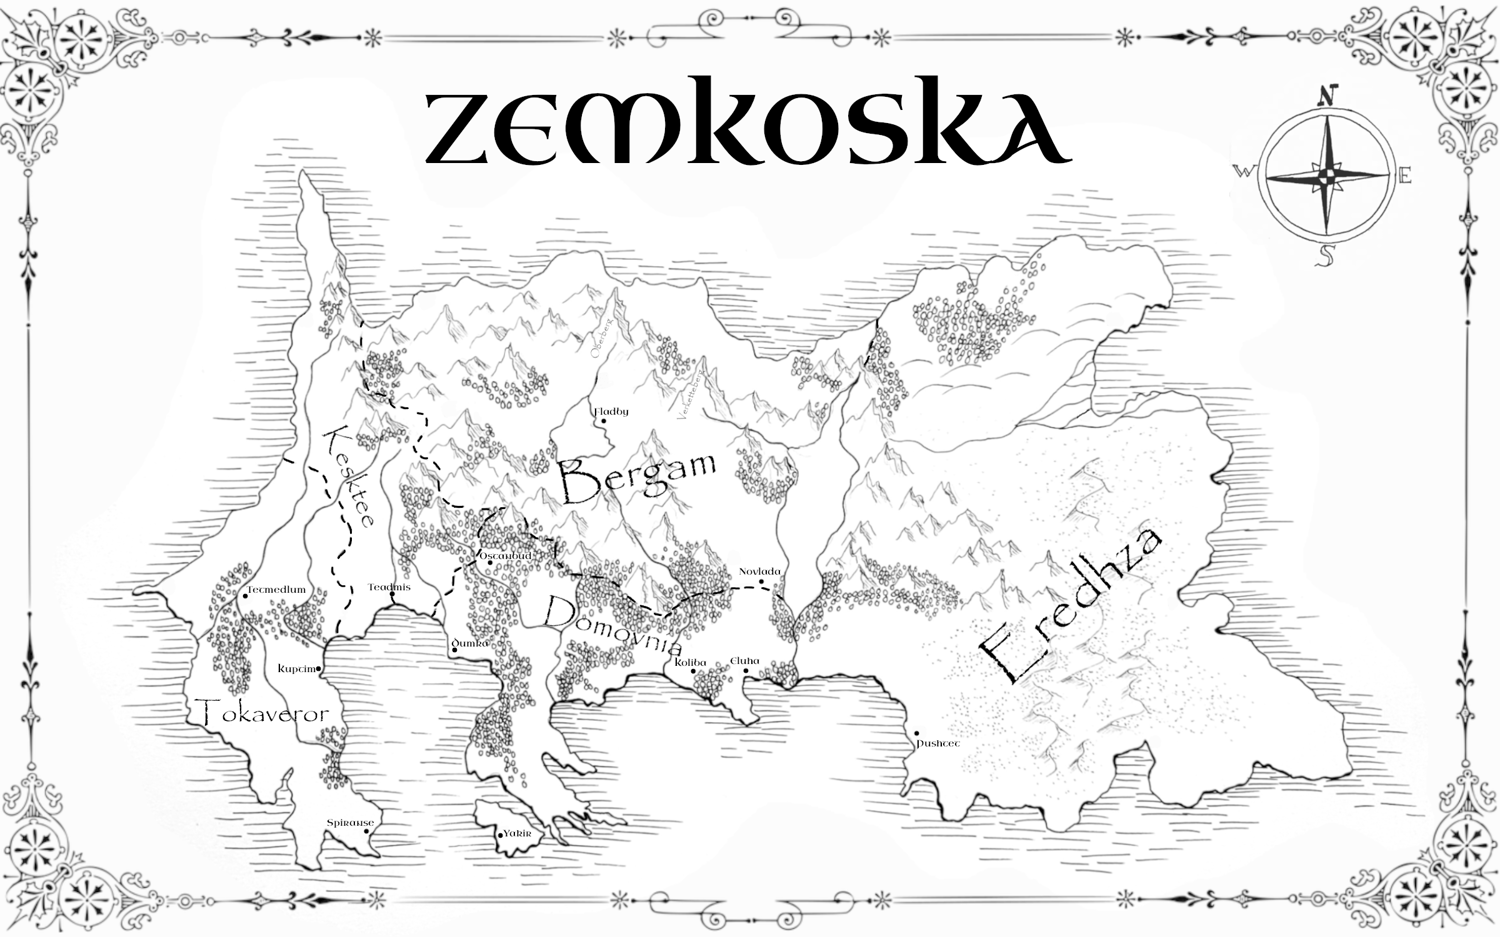 The Zemkoska Chronicles